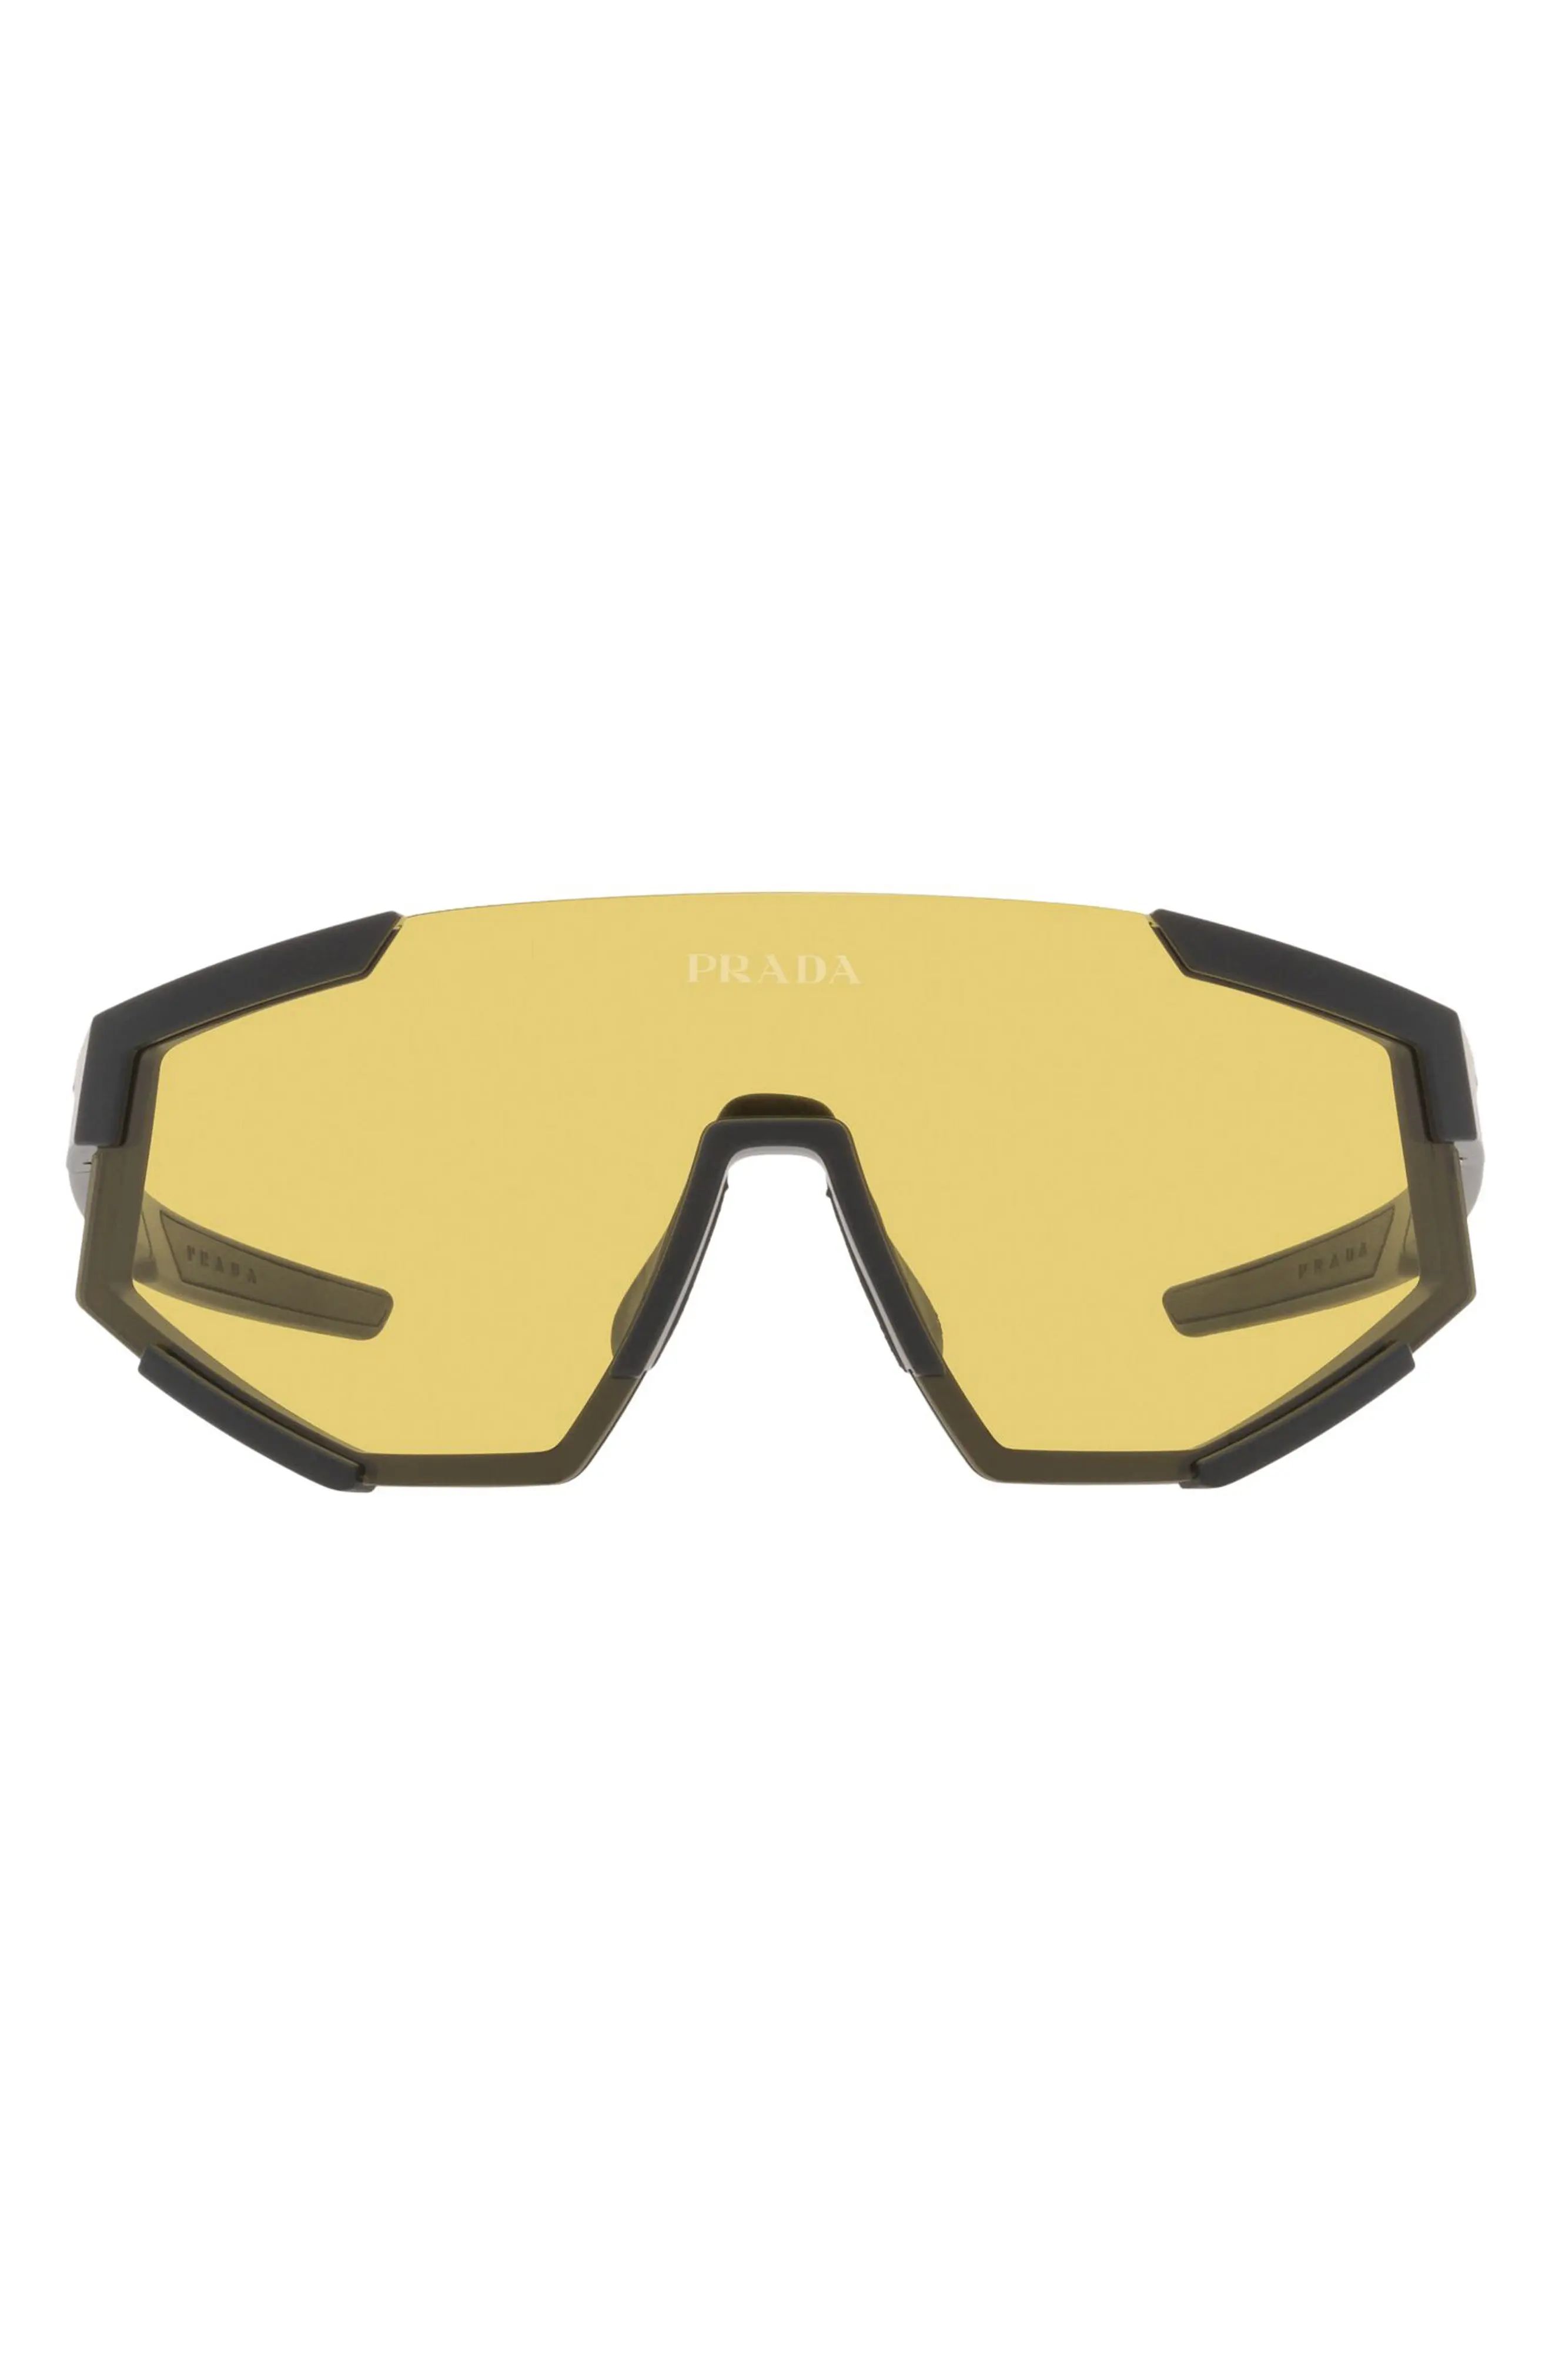 PRADA SPORT 39mm Shield Sunglasses in Black Rubber/yellow at Nordstrom | Nordstrom